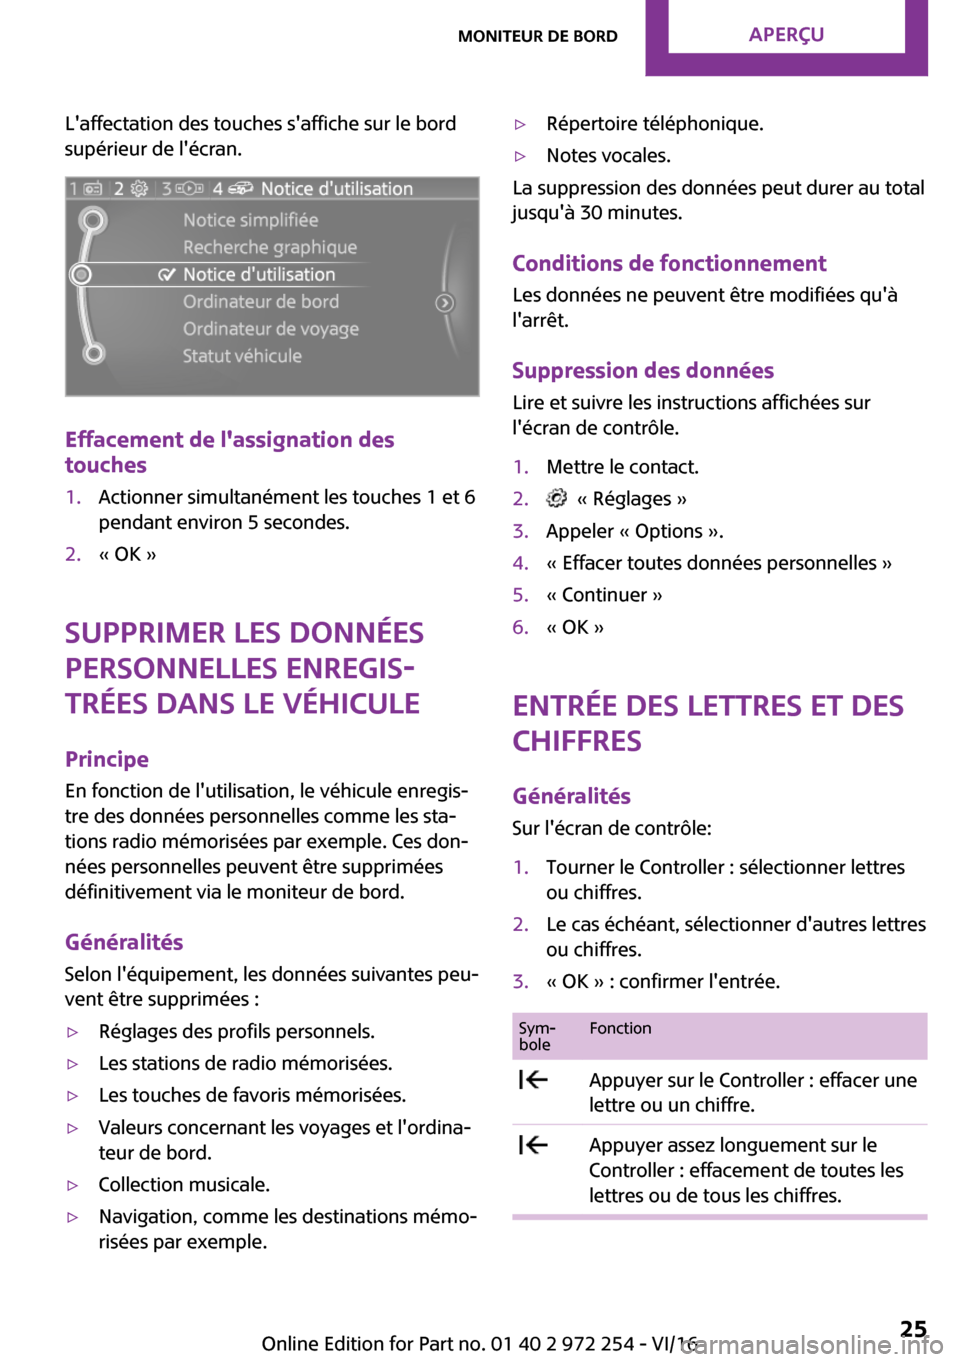 MINI Clubman 2016  Manuel du propriétaire (in French) �L��a�f�f�e�c�t�a�t�i�o�n� �d�e�s� �t�o�u�c�h�e�s� �s��a�f�f�i�c�h�e� �s�u�r� �l�e� �b�o�r�d
�s�u�p�é�r�i�e�u�r� �d�e� �l��é�c�r�a�n�.
�E�f�f�a�c�e�m�e�n�t��d�e��l��a�s�s�i�g�n�a�t�i�o�n��d�e